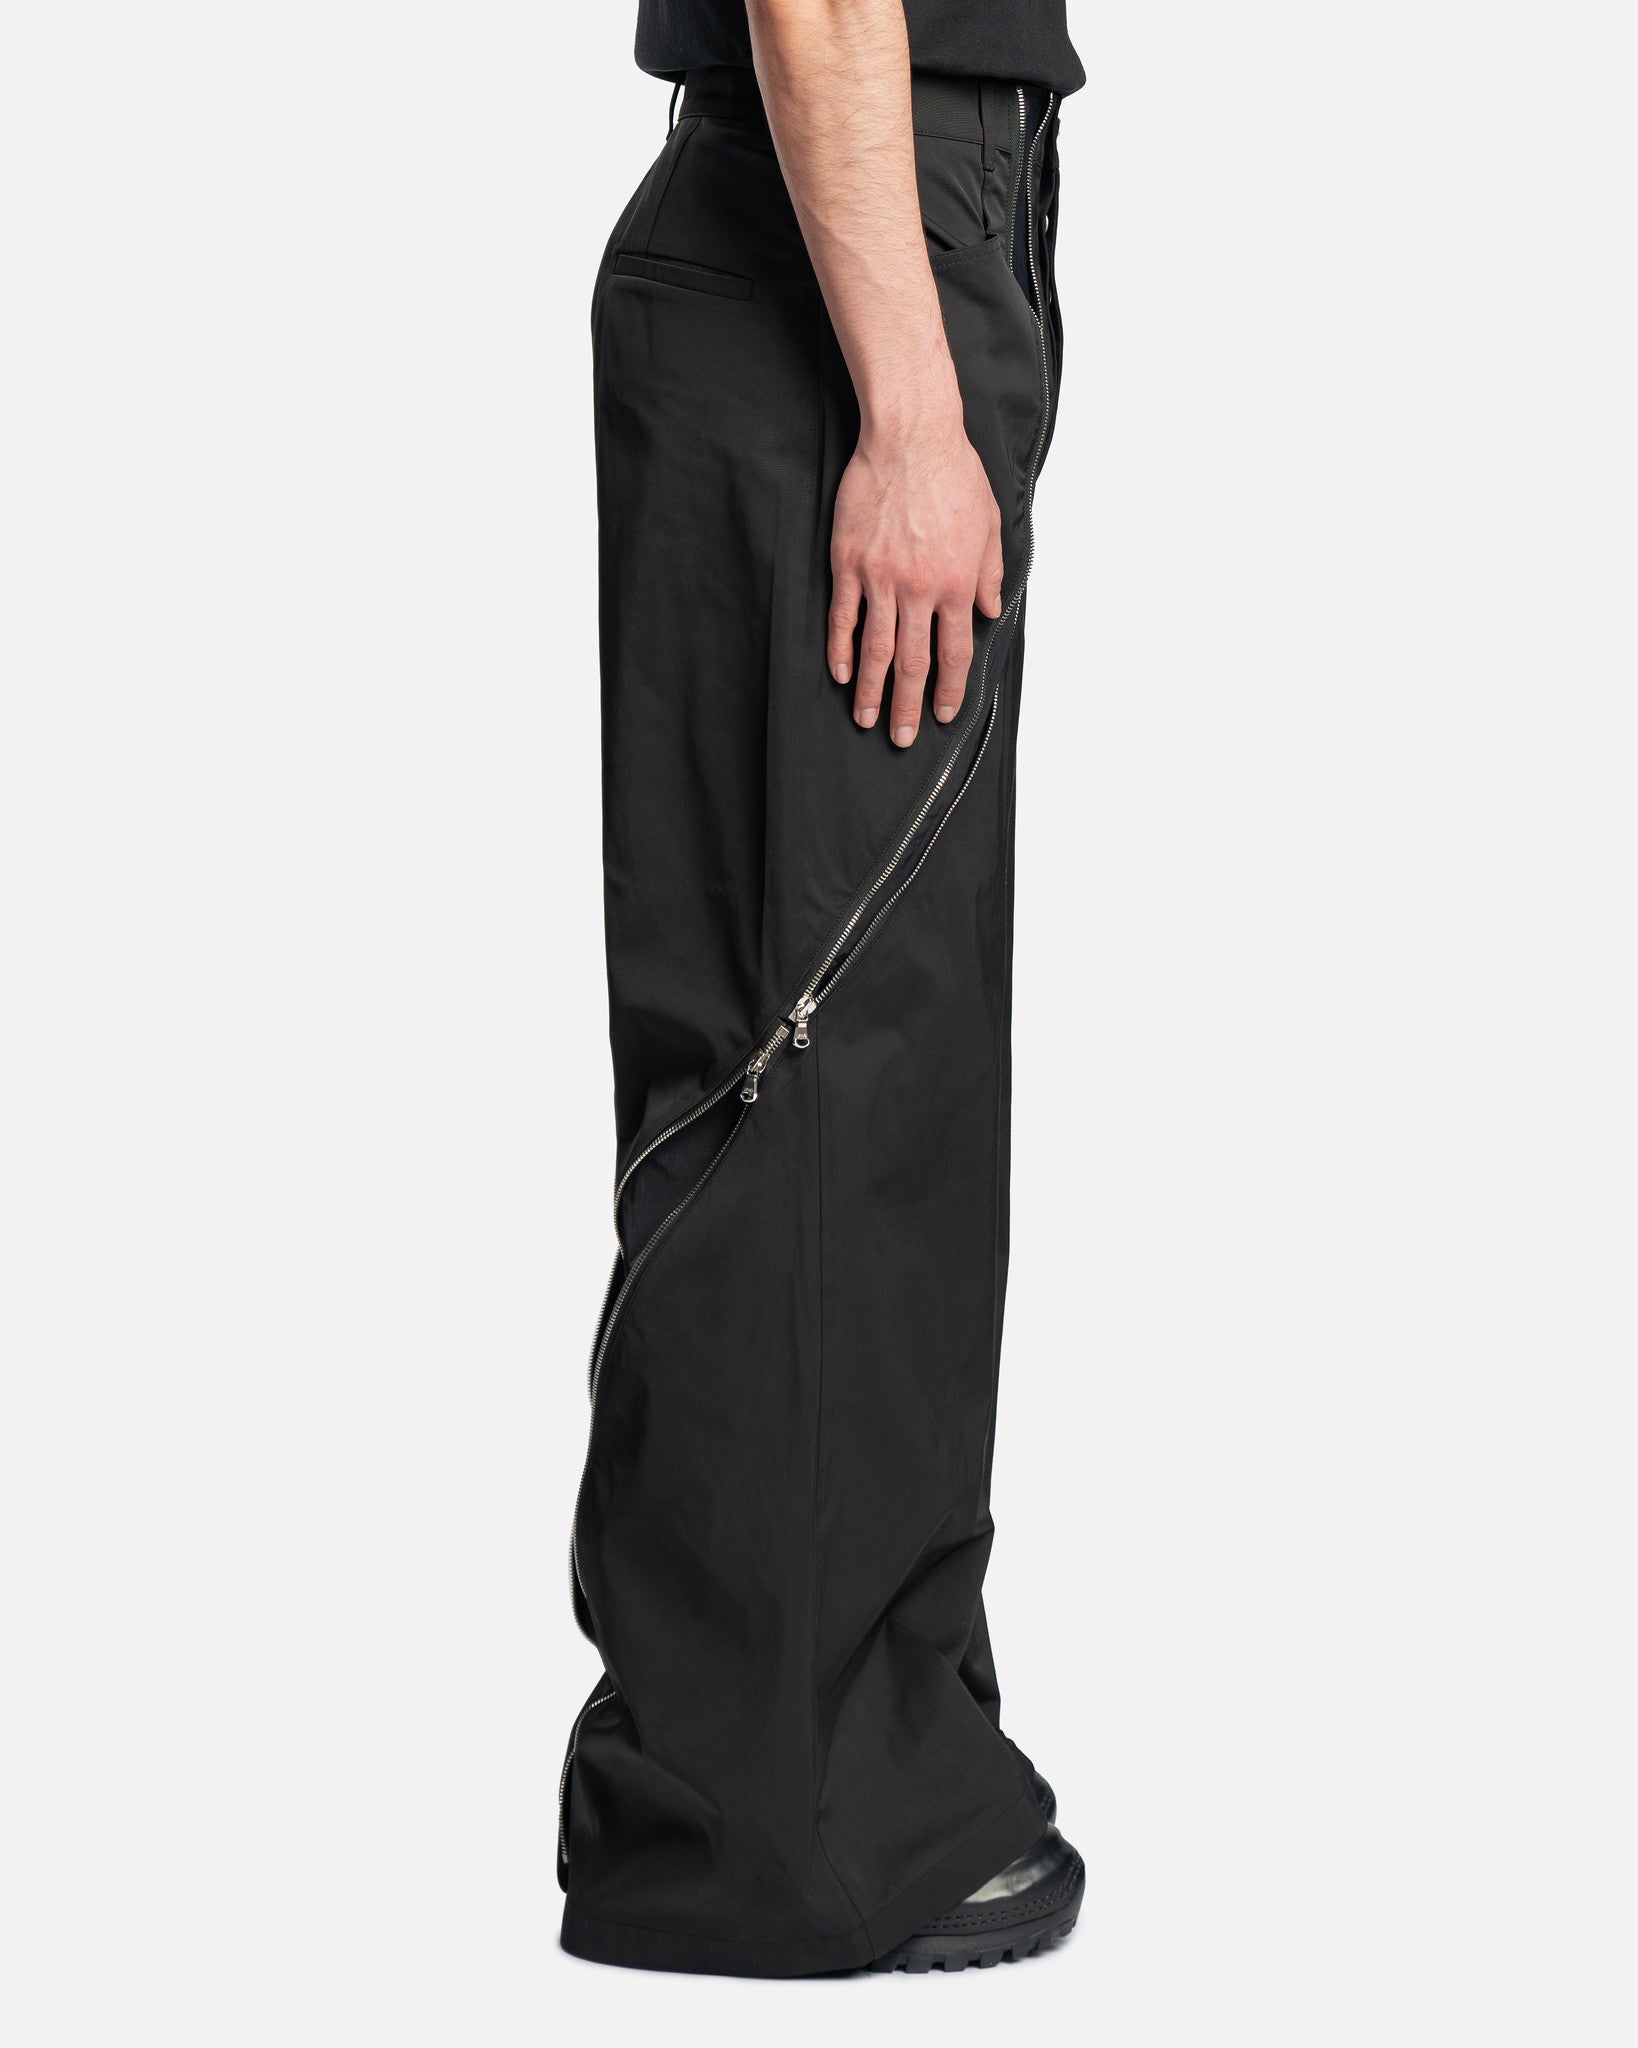 FFFPOSTALSERVICE Zip Trouser Black パンツ